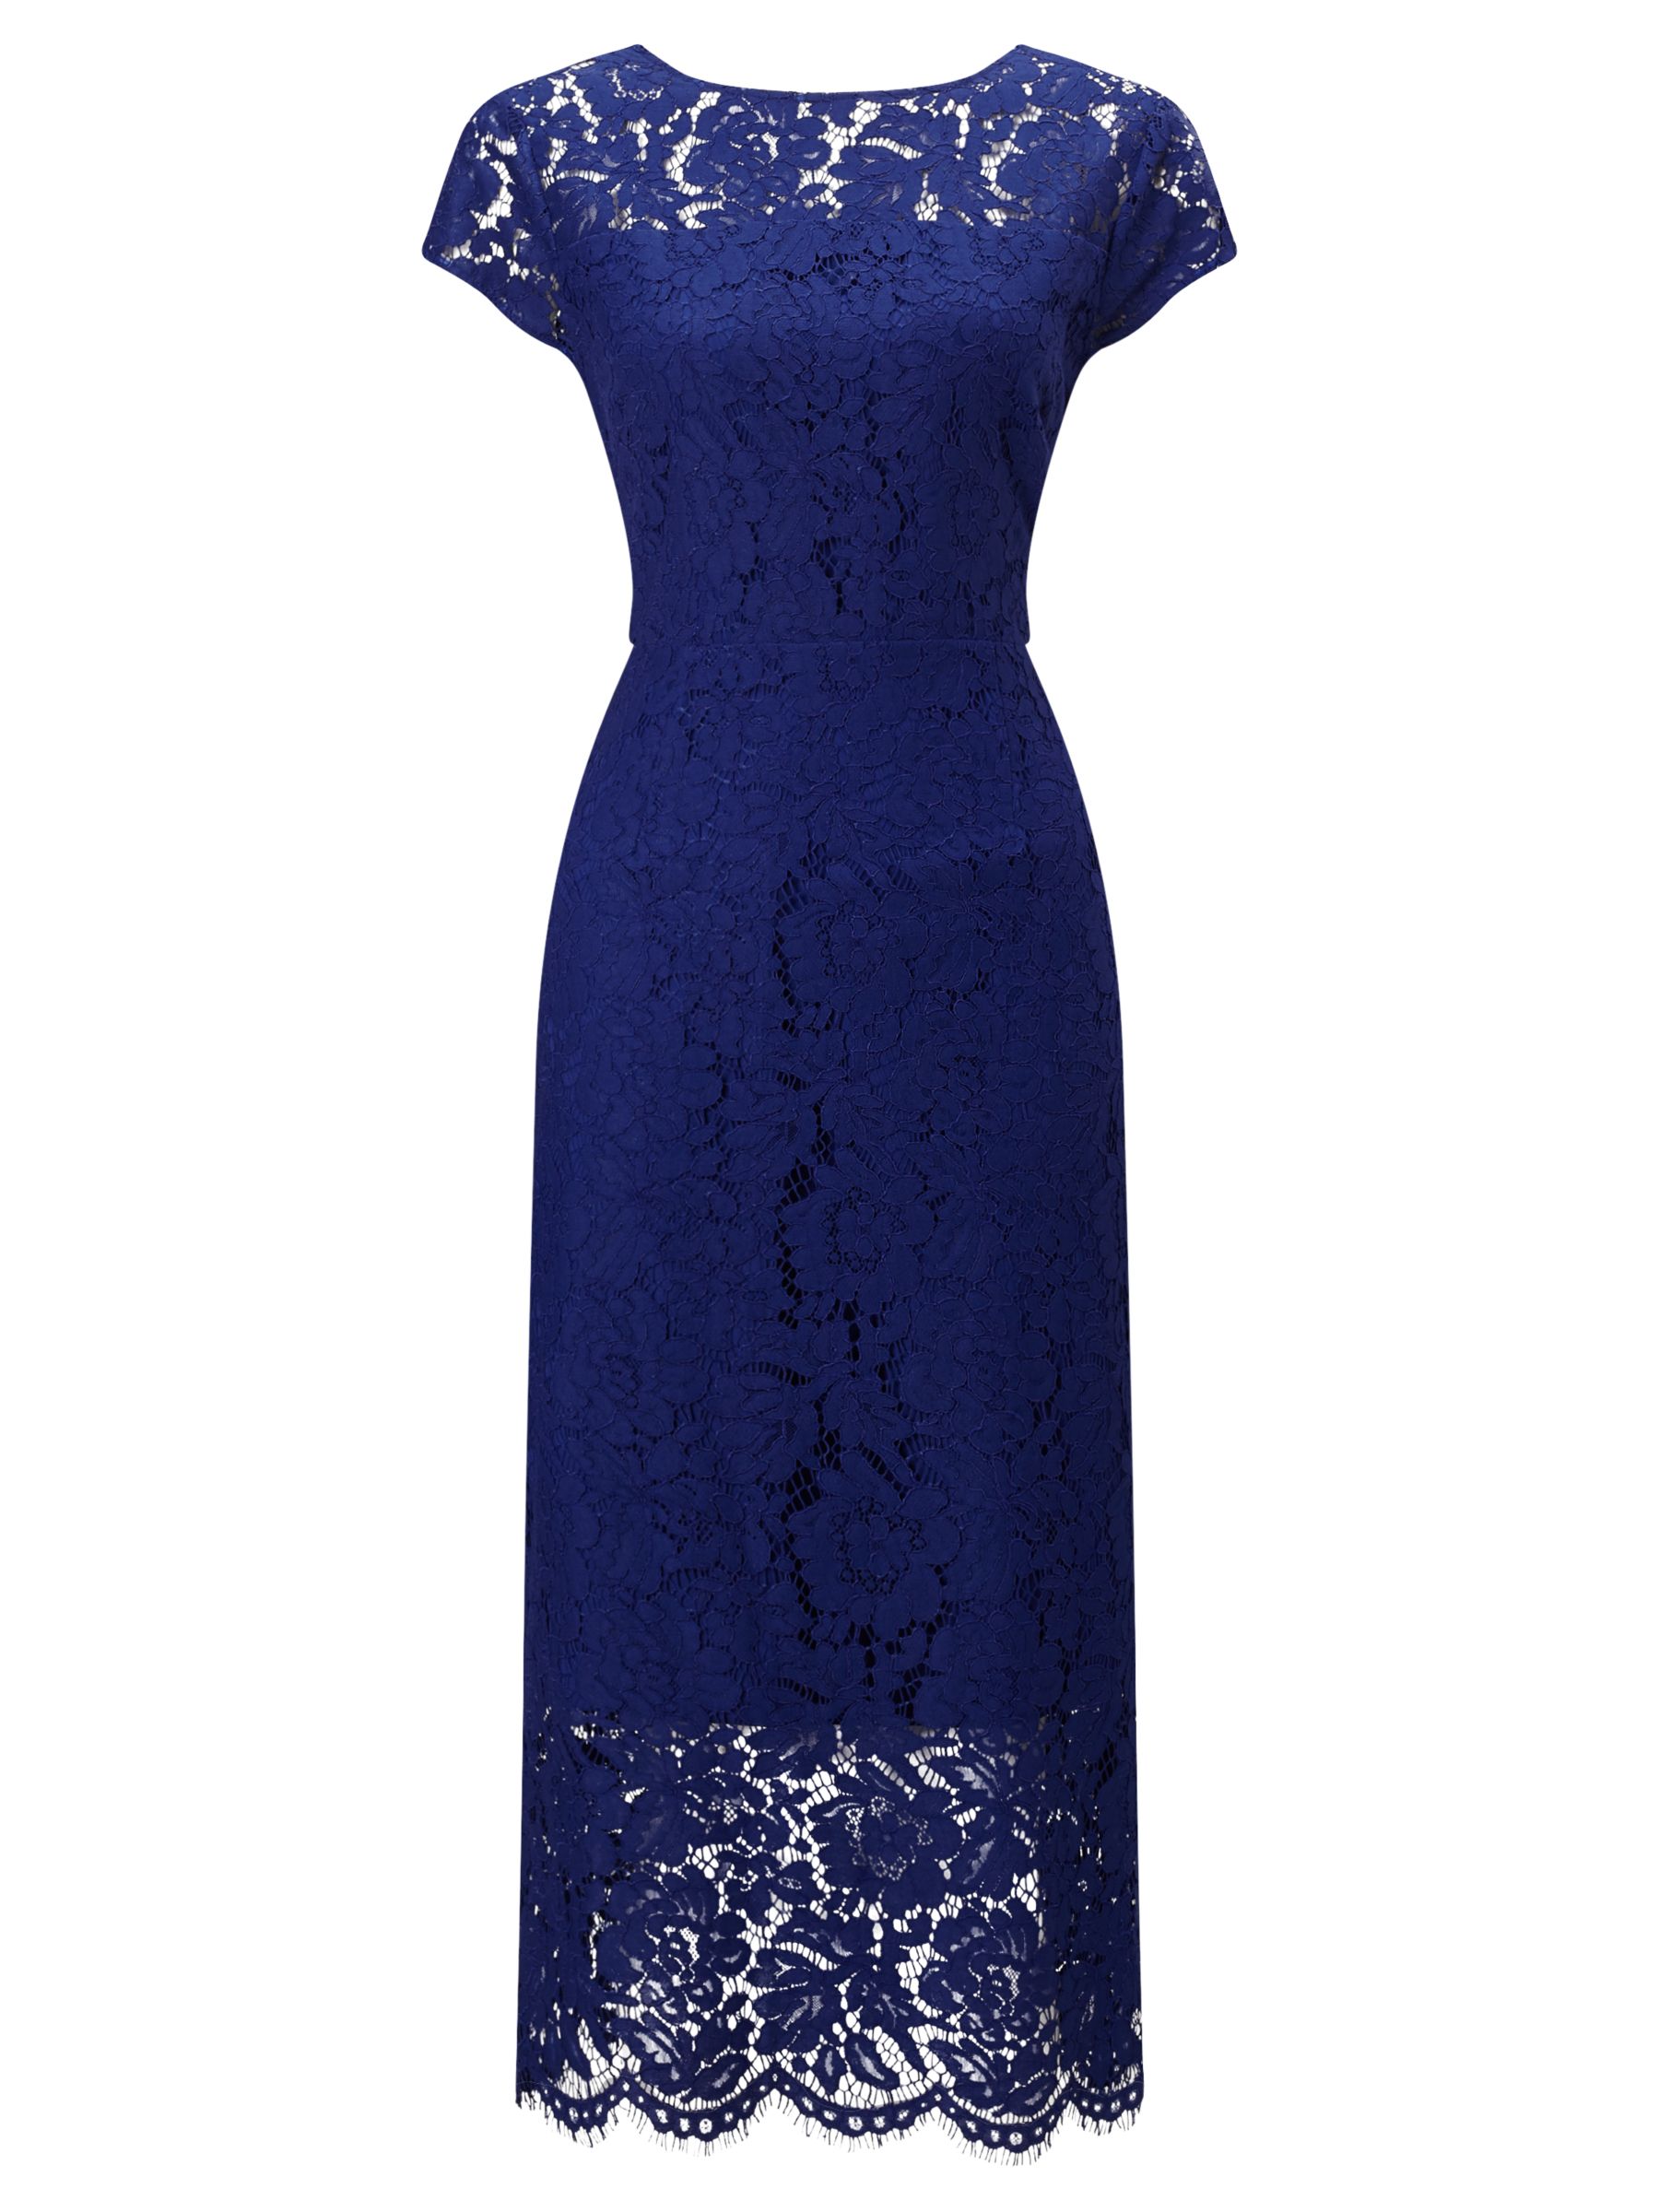 John Lewis & Partners Short Sleeve Lace Dress, Blue, 16